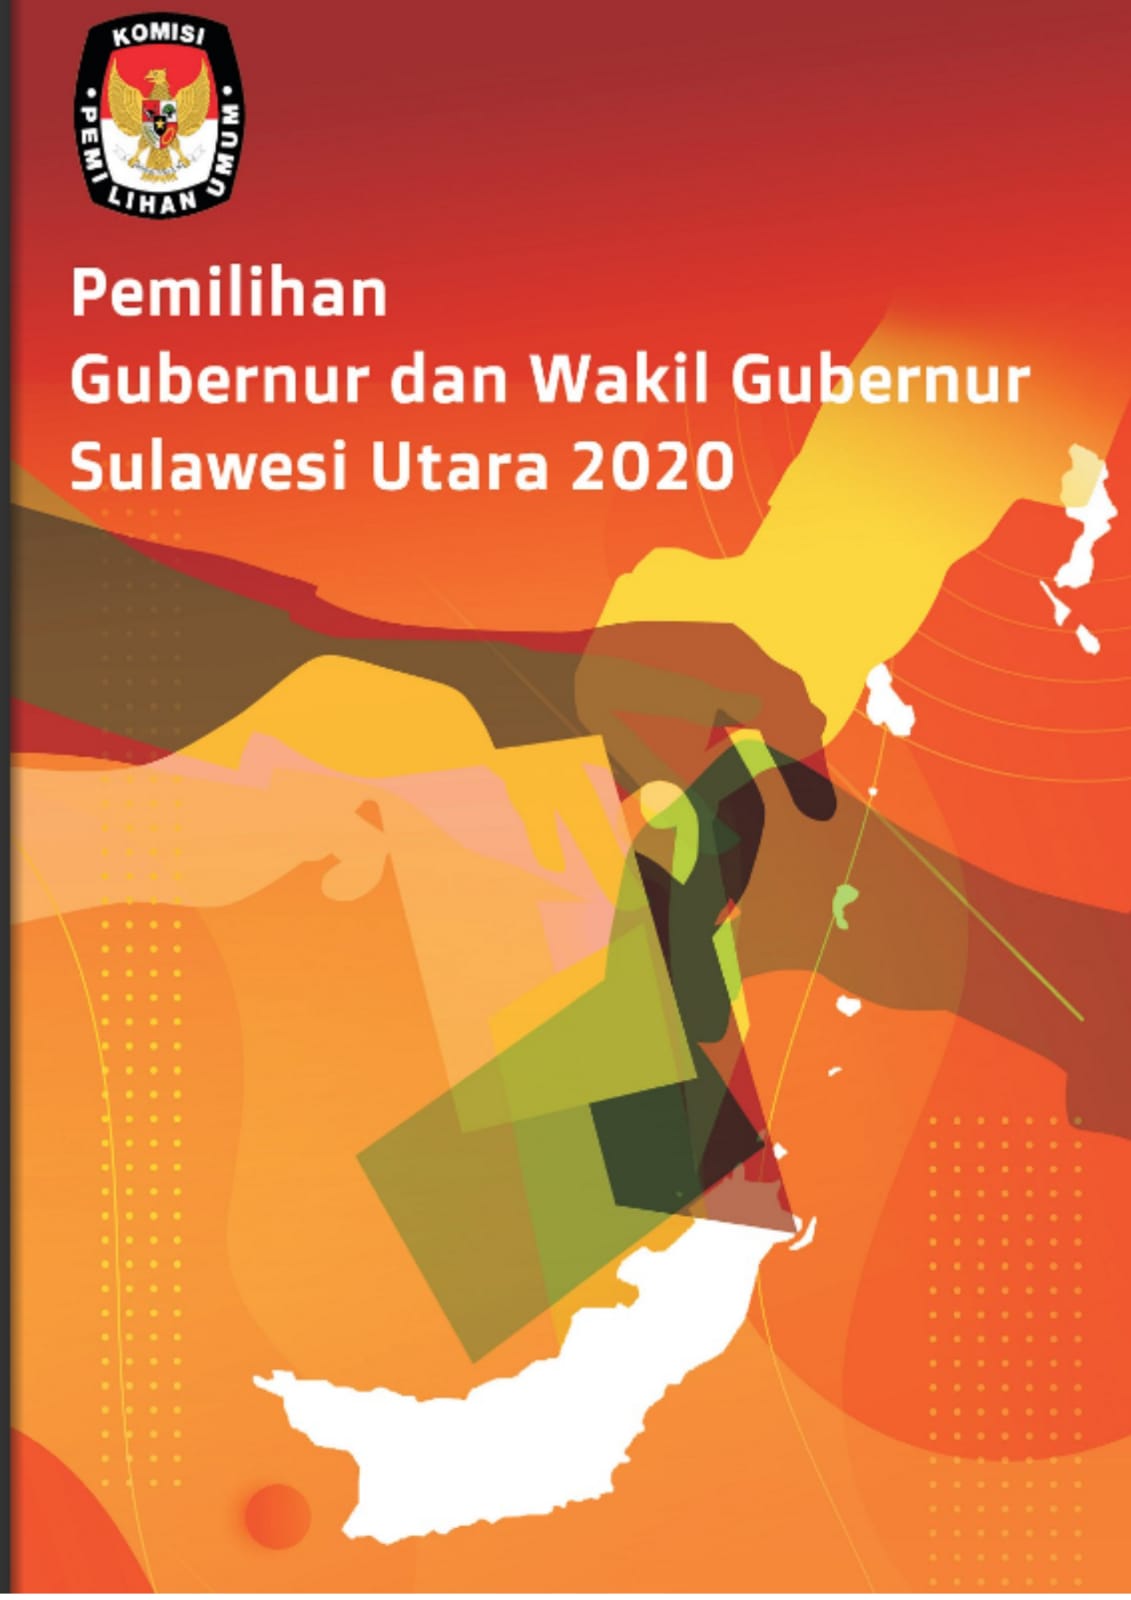 Pemilihan Gubernur dan Wakil Gubernur Sulawesi Utara 2020